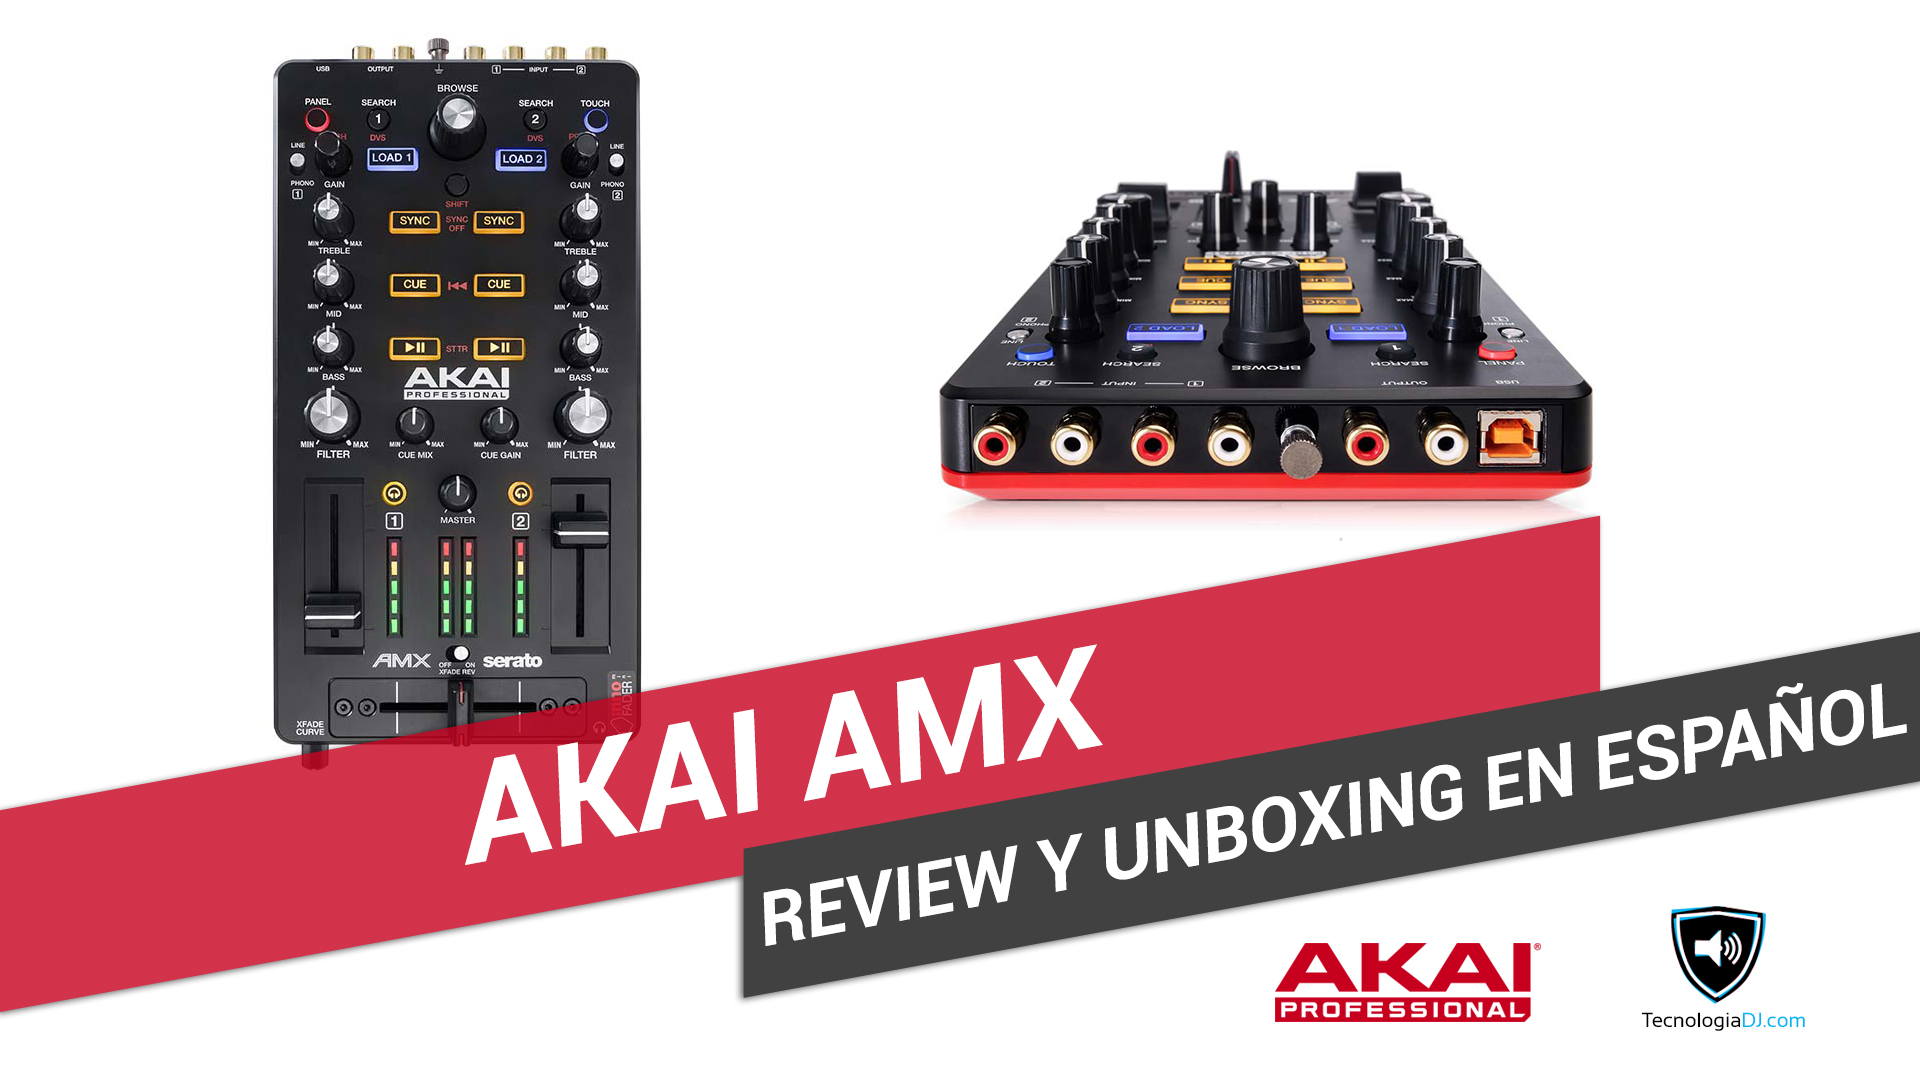 Review y unboxing en español controlador Akai AMX